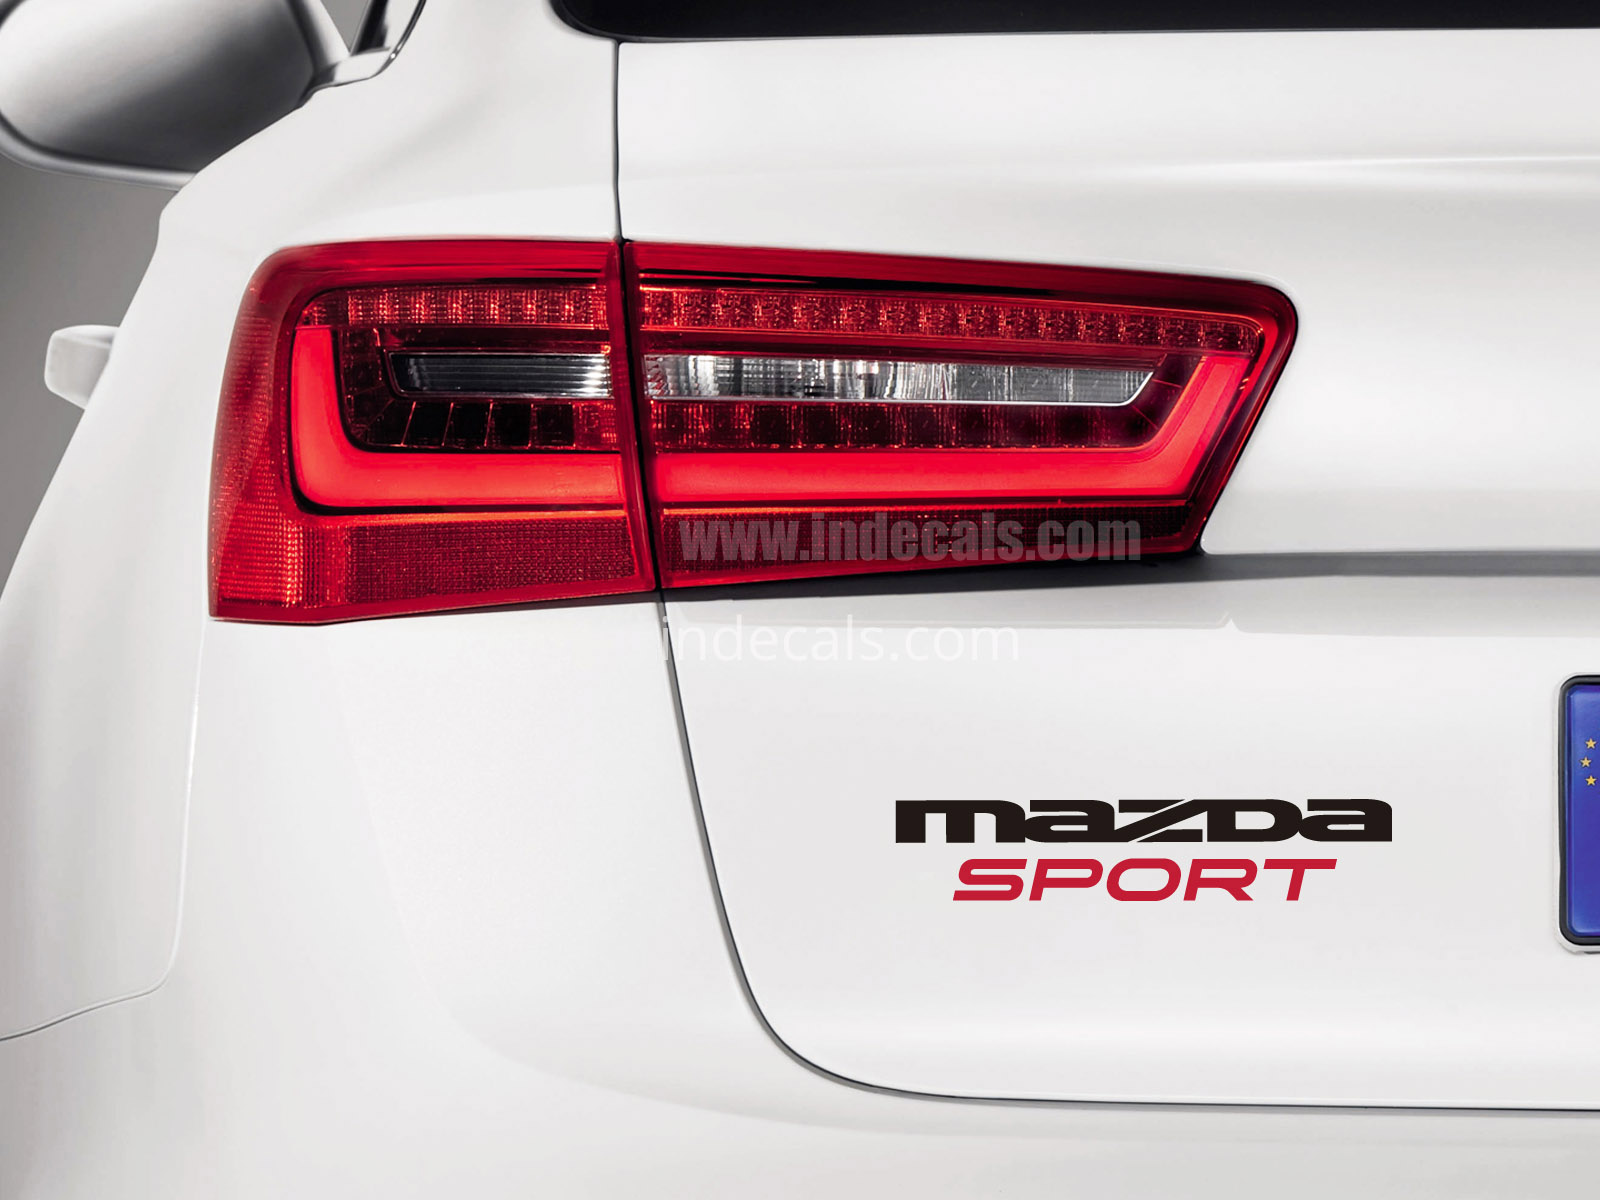 1 x Mazda Sports Sticker for Trunk - Black & Red